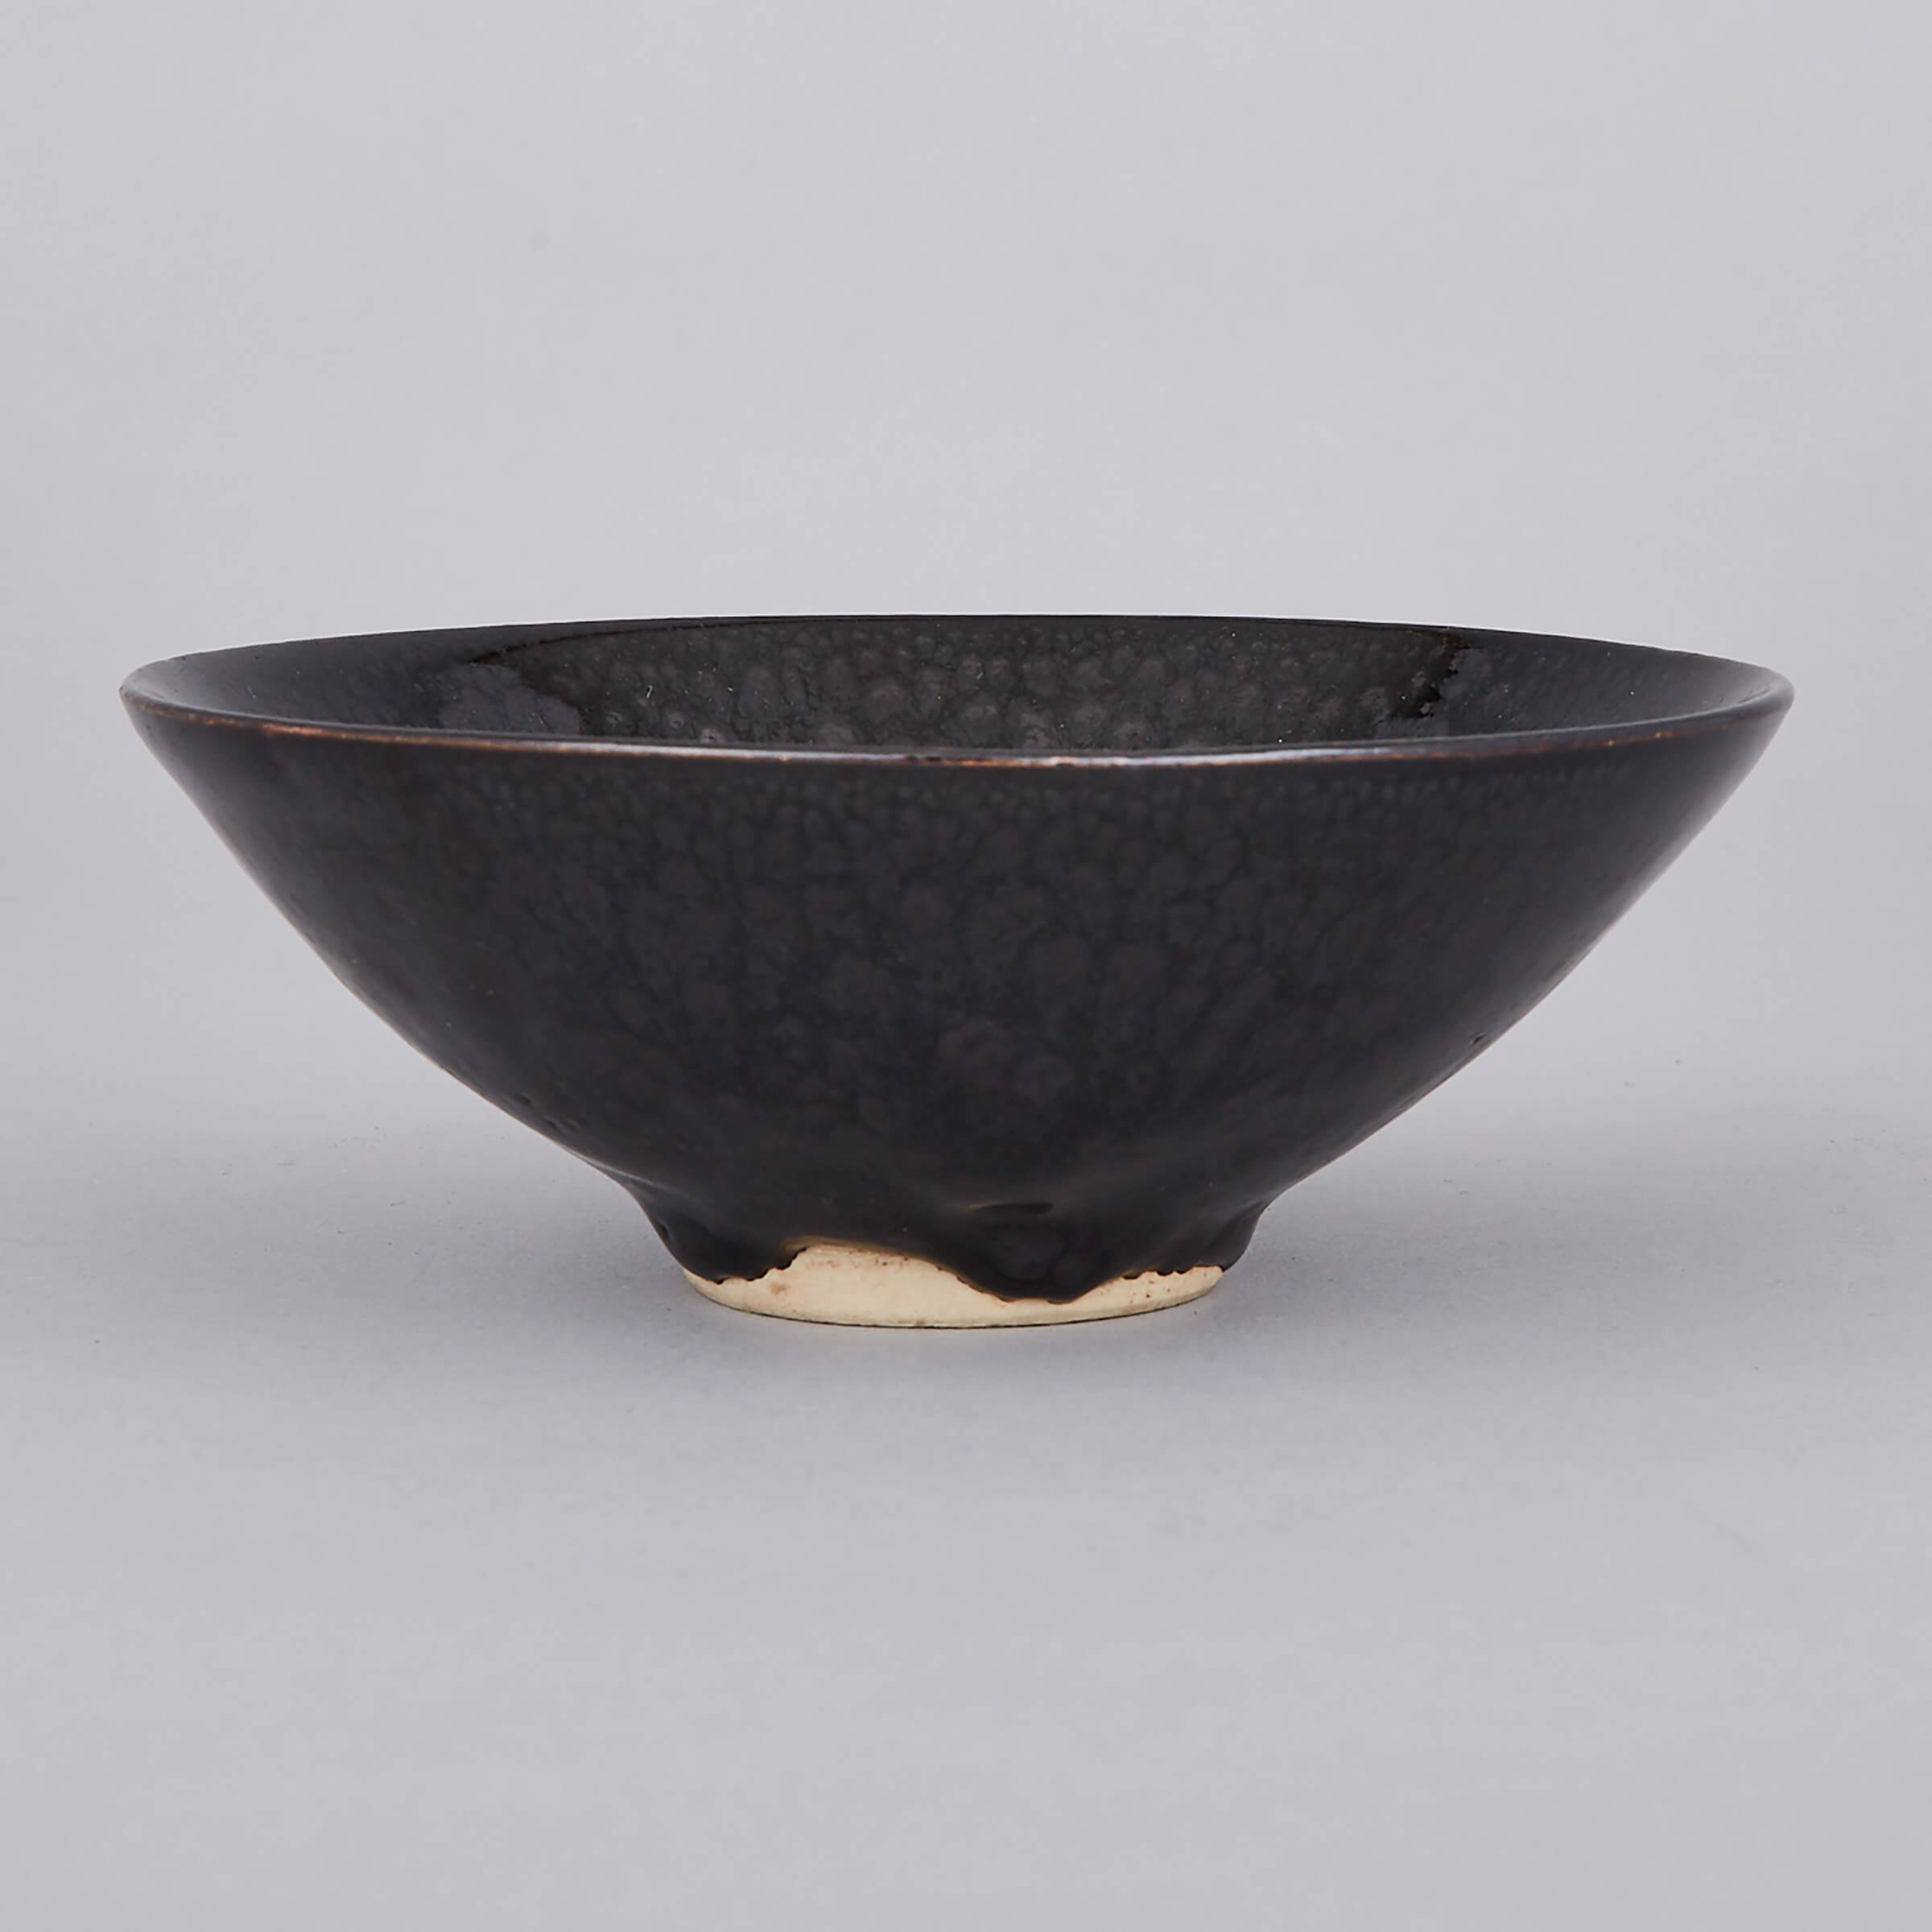 A Black Glazed Tea Bowl